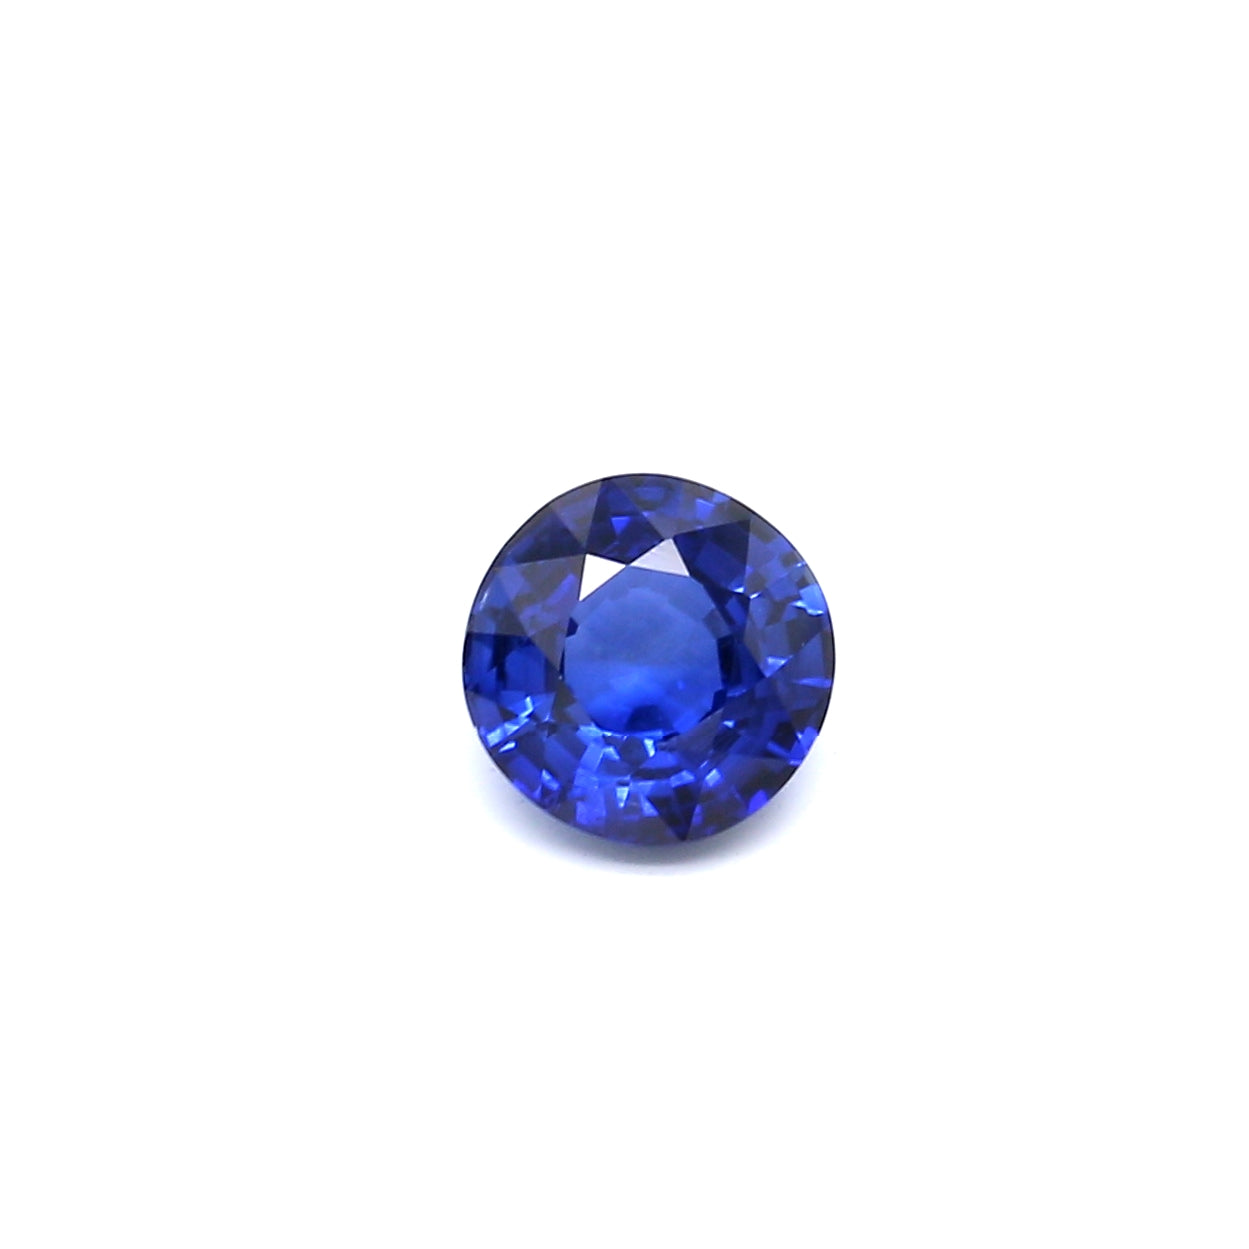 1.24ct Round Sapphire, Heated, Sri Lanka - 6.22 x 6.33 x 3.75mm